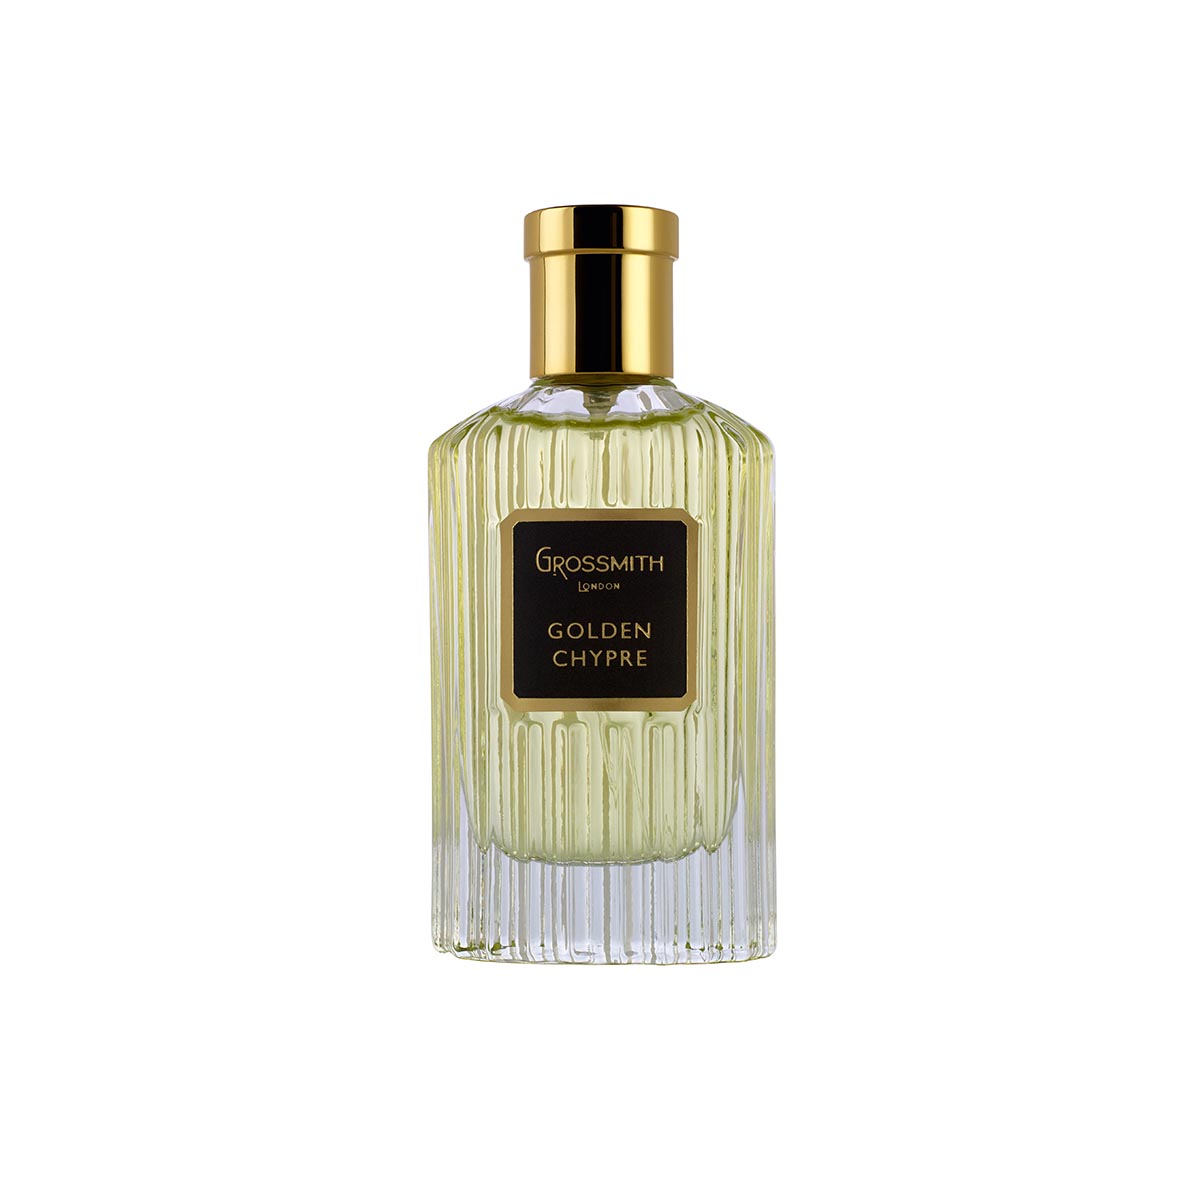 Golden Chypre 50ml Eau de Parfum Bottle by Grossmith London